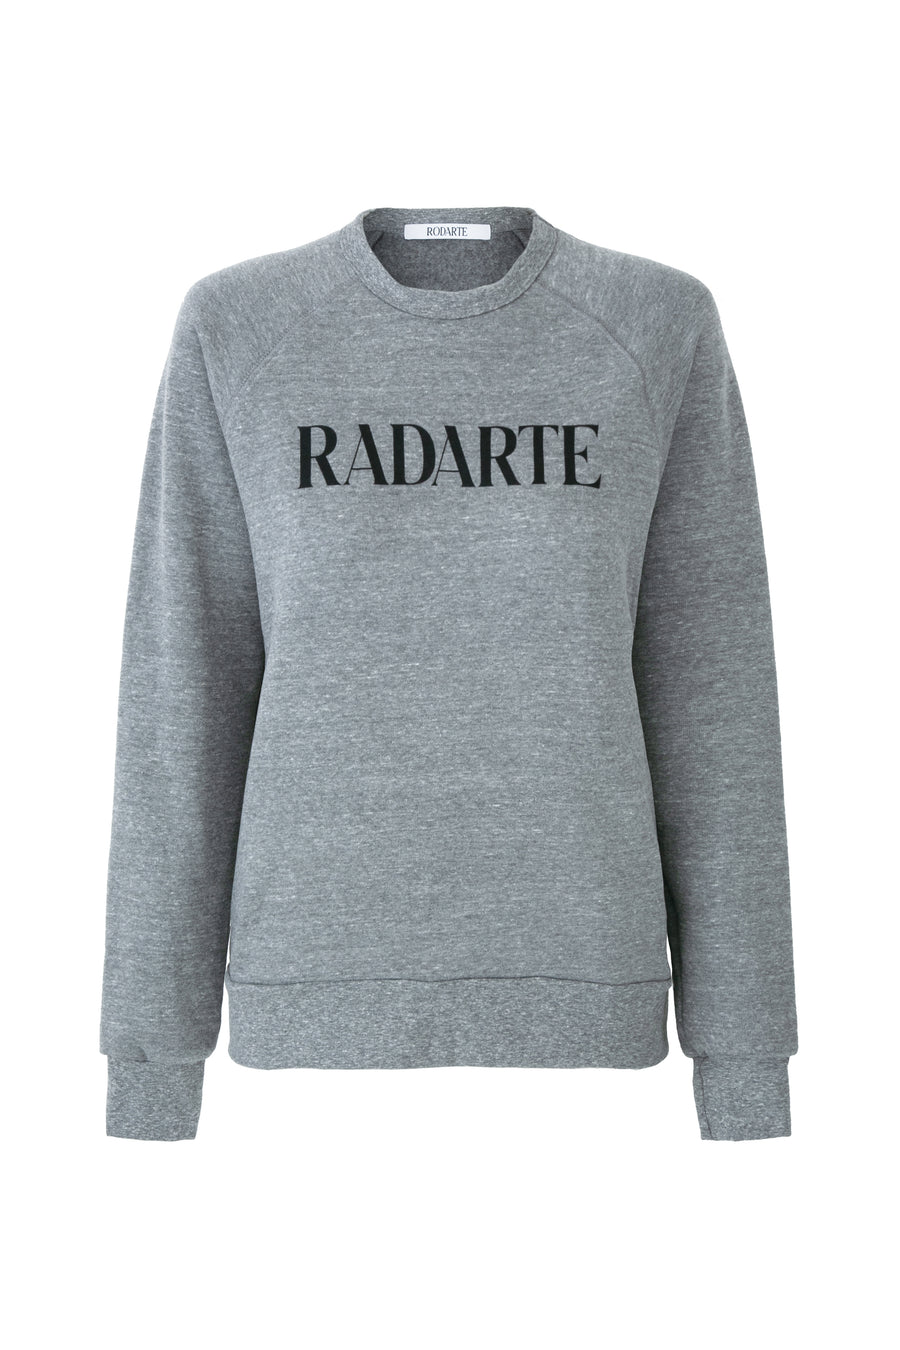 Radarte Logo Sweatshirt